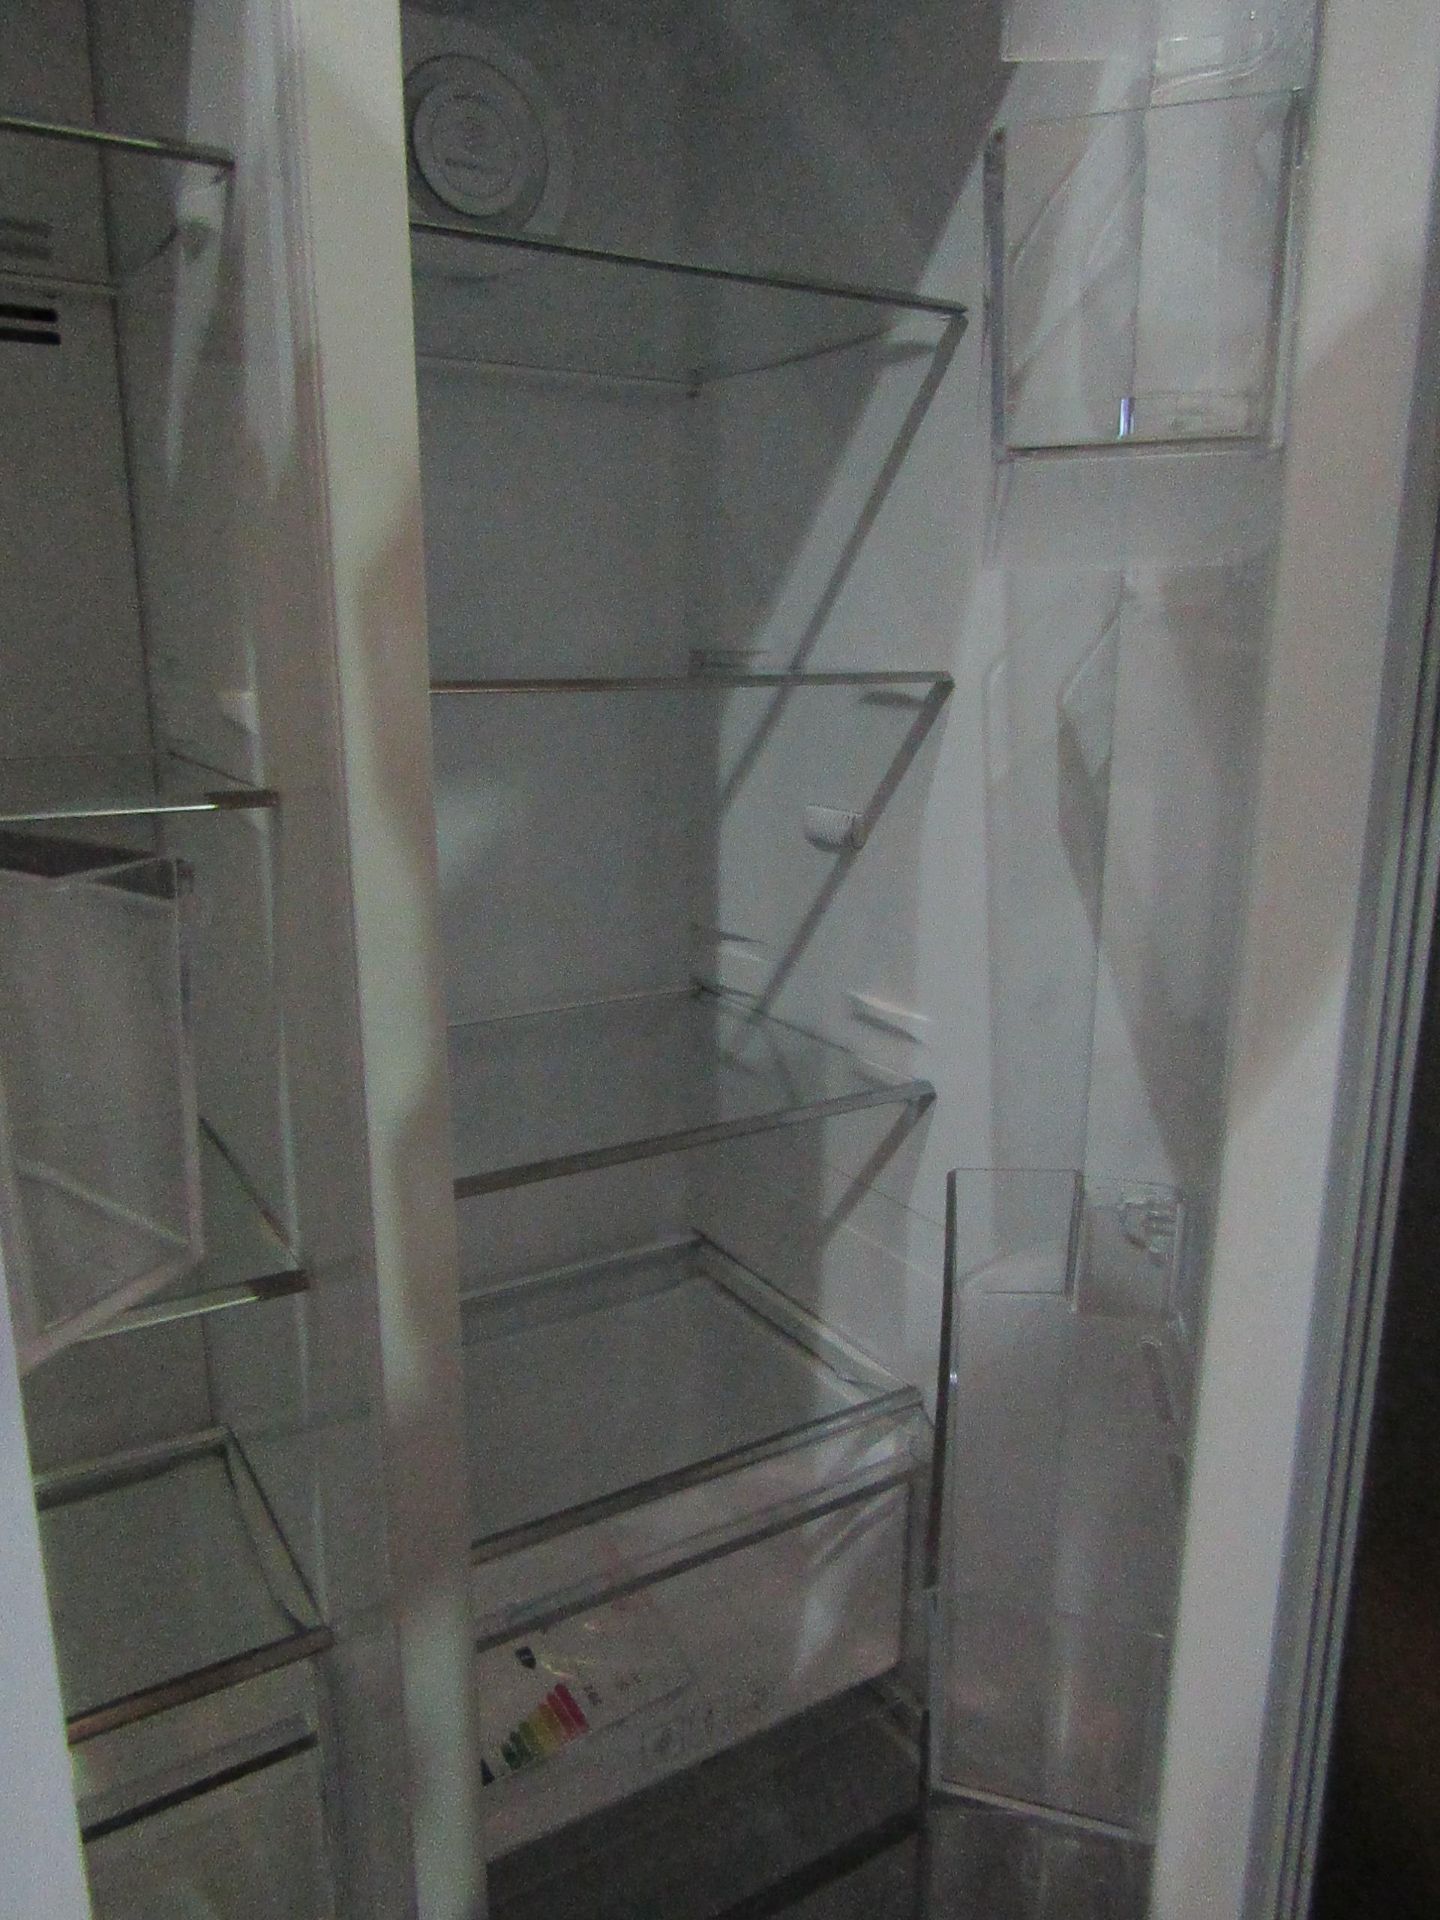 Beko American style fridge freezer, tested working - Image 2 of 3